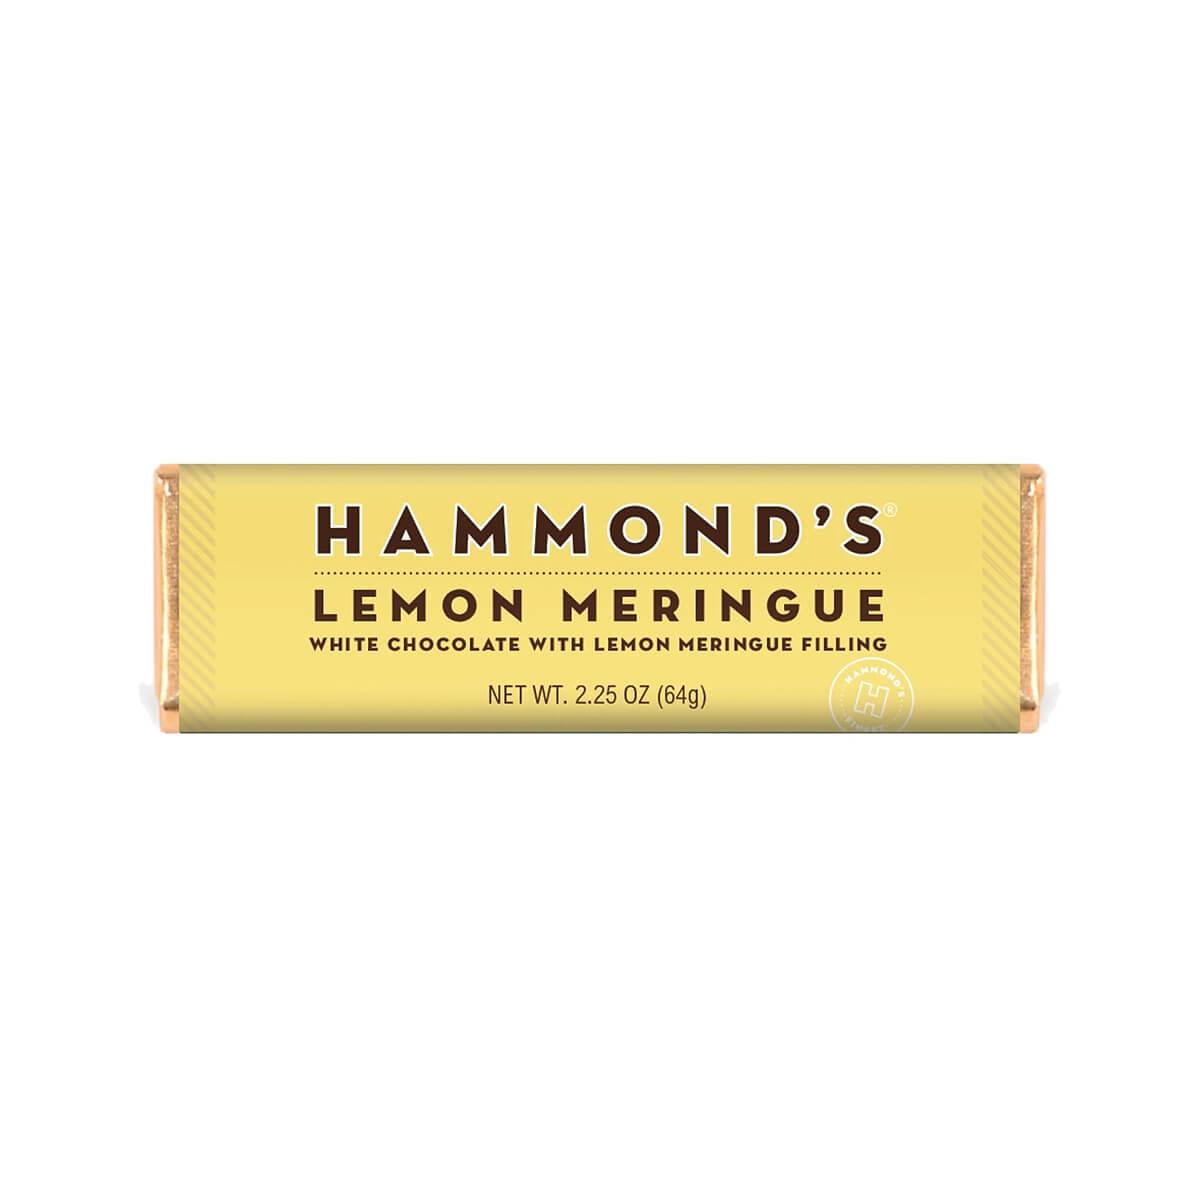  Lemon Meringue White Chocolate Candy Bar